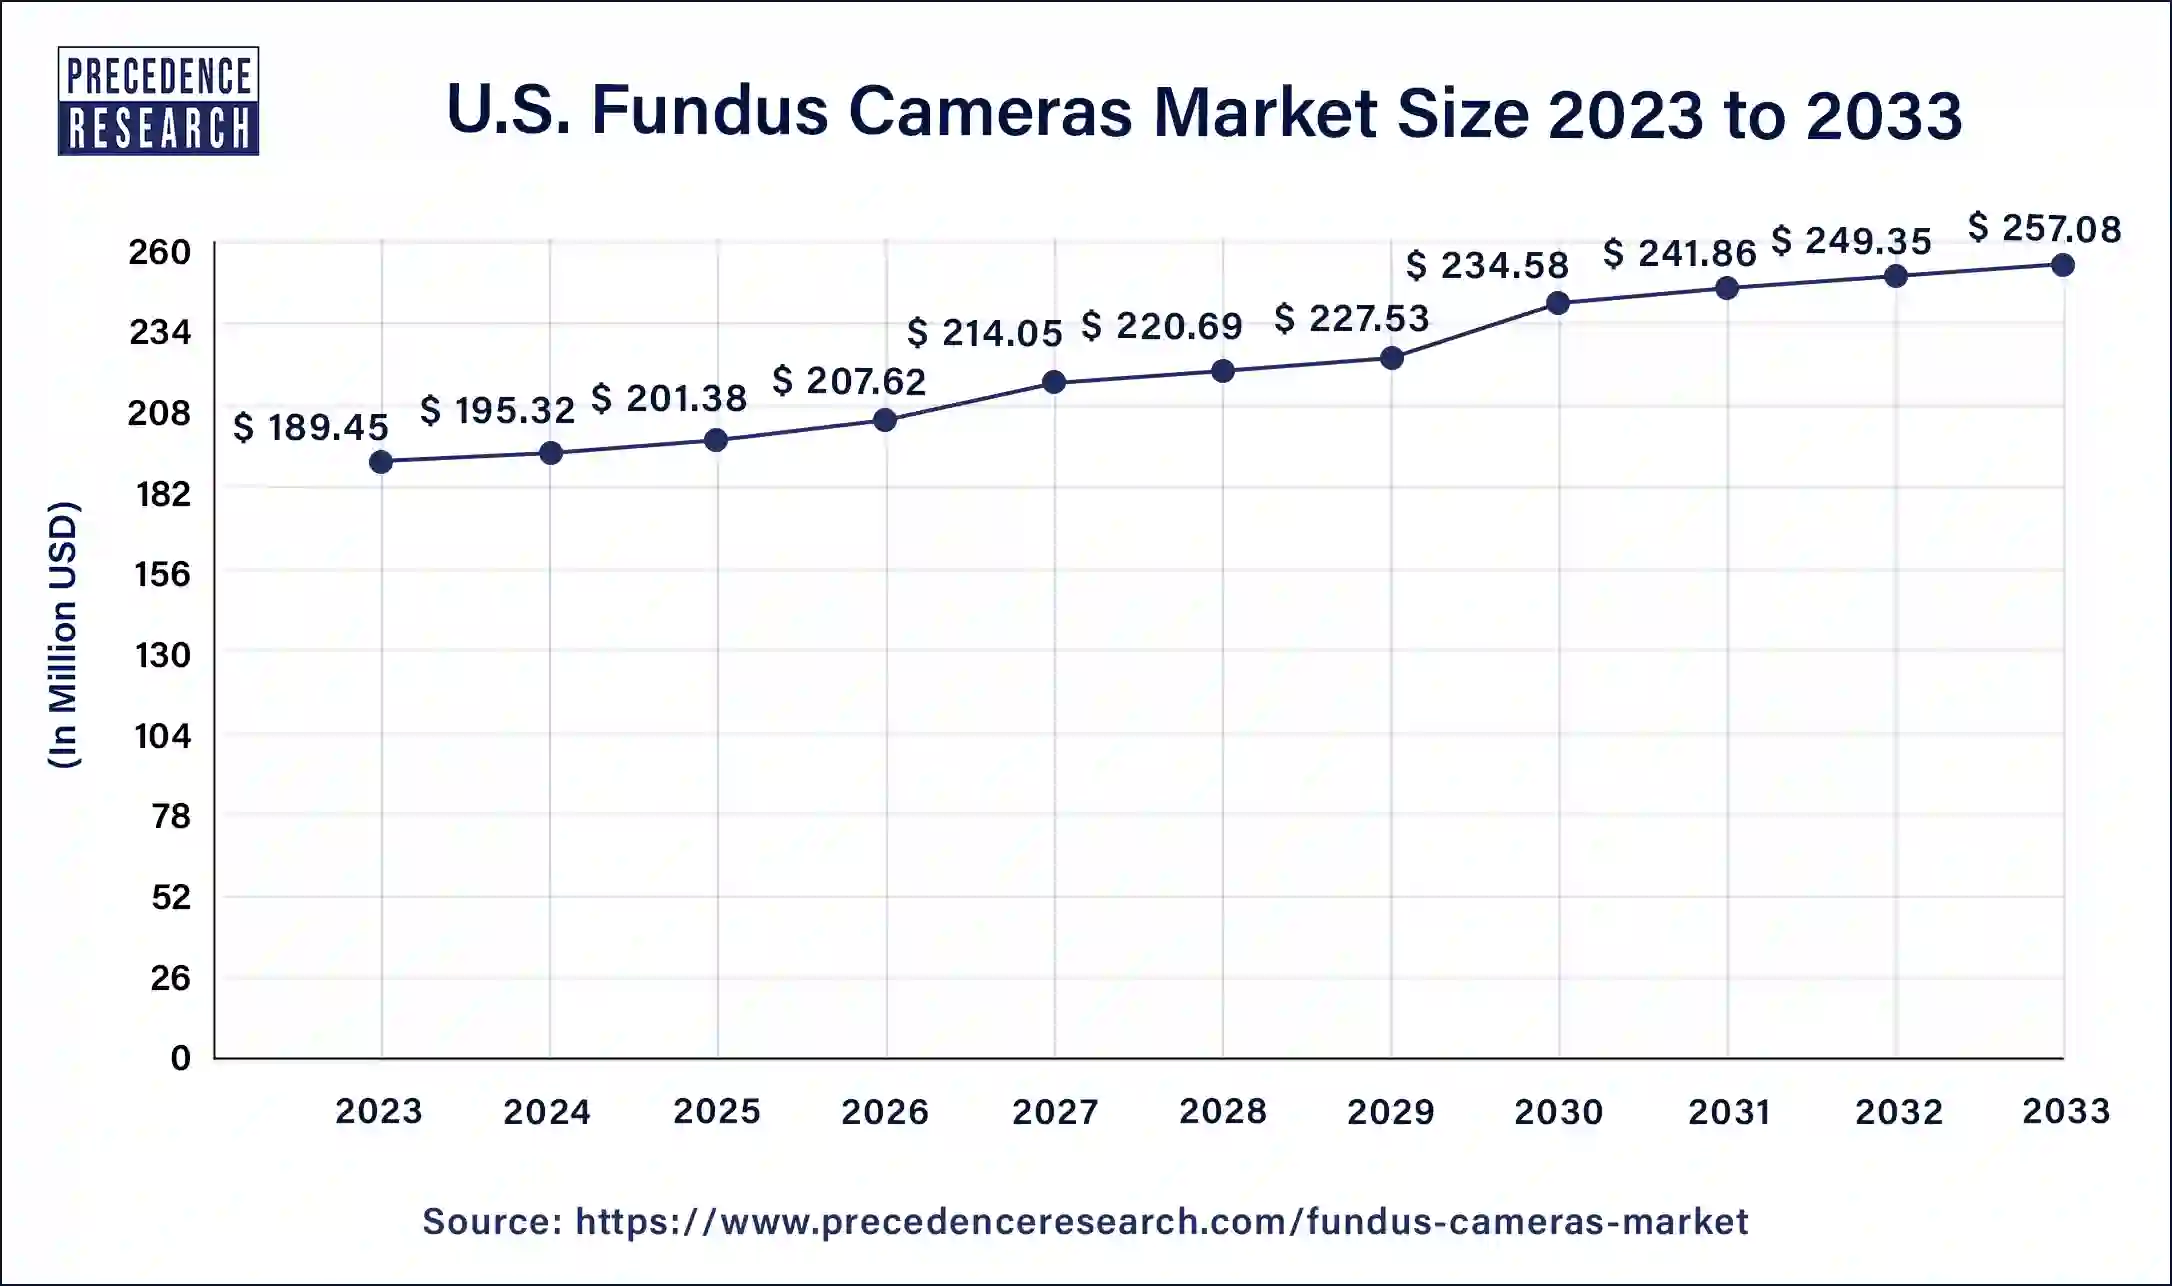 U.S. Fundus Cameras Market Size 2024 to 2033